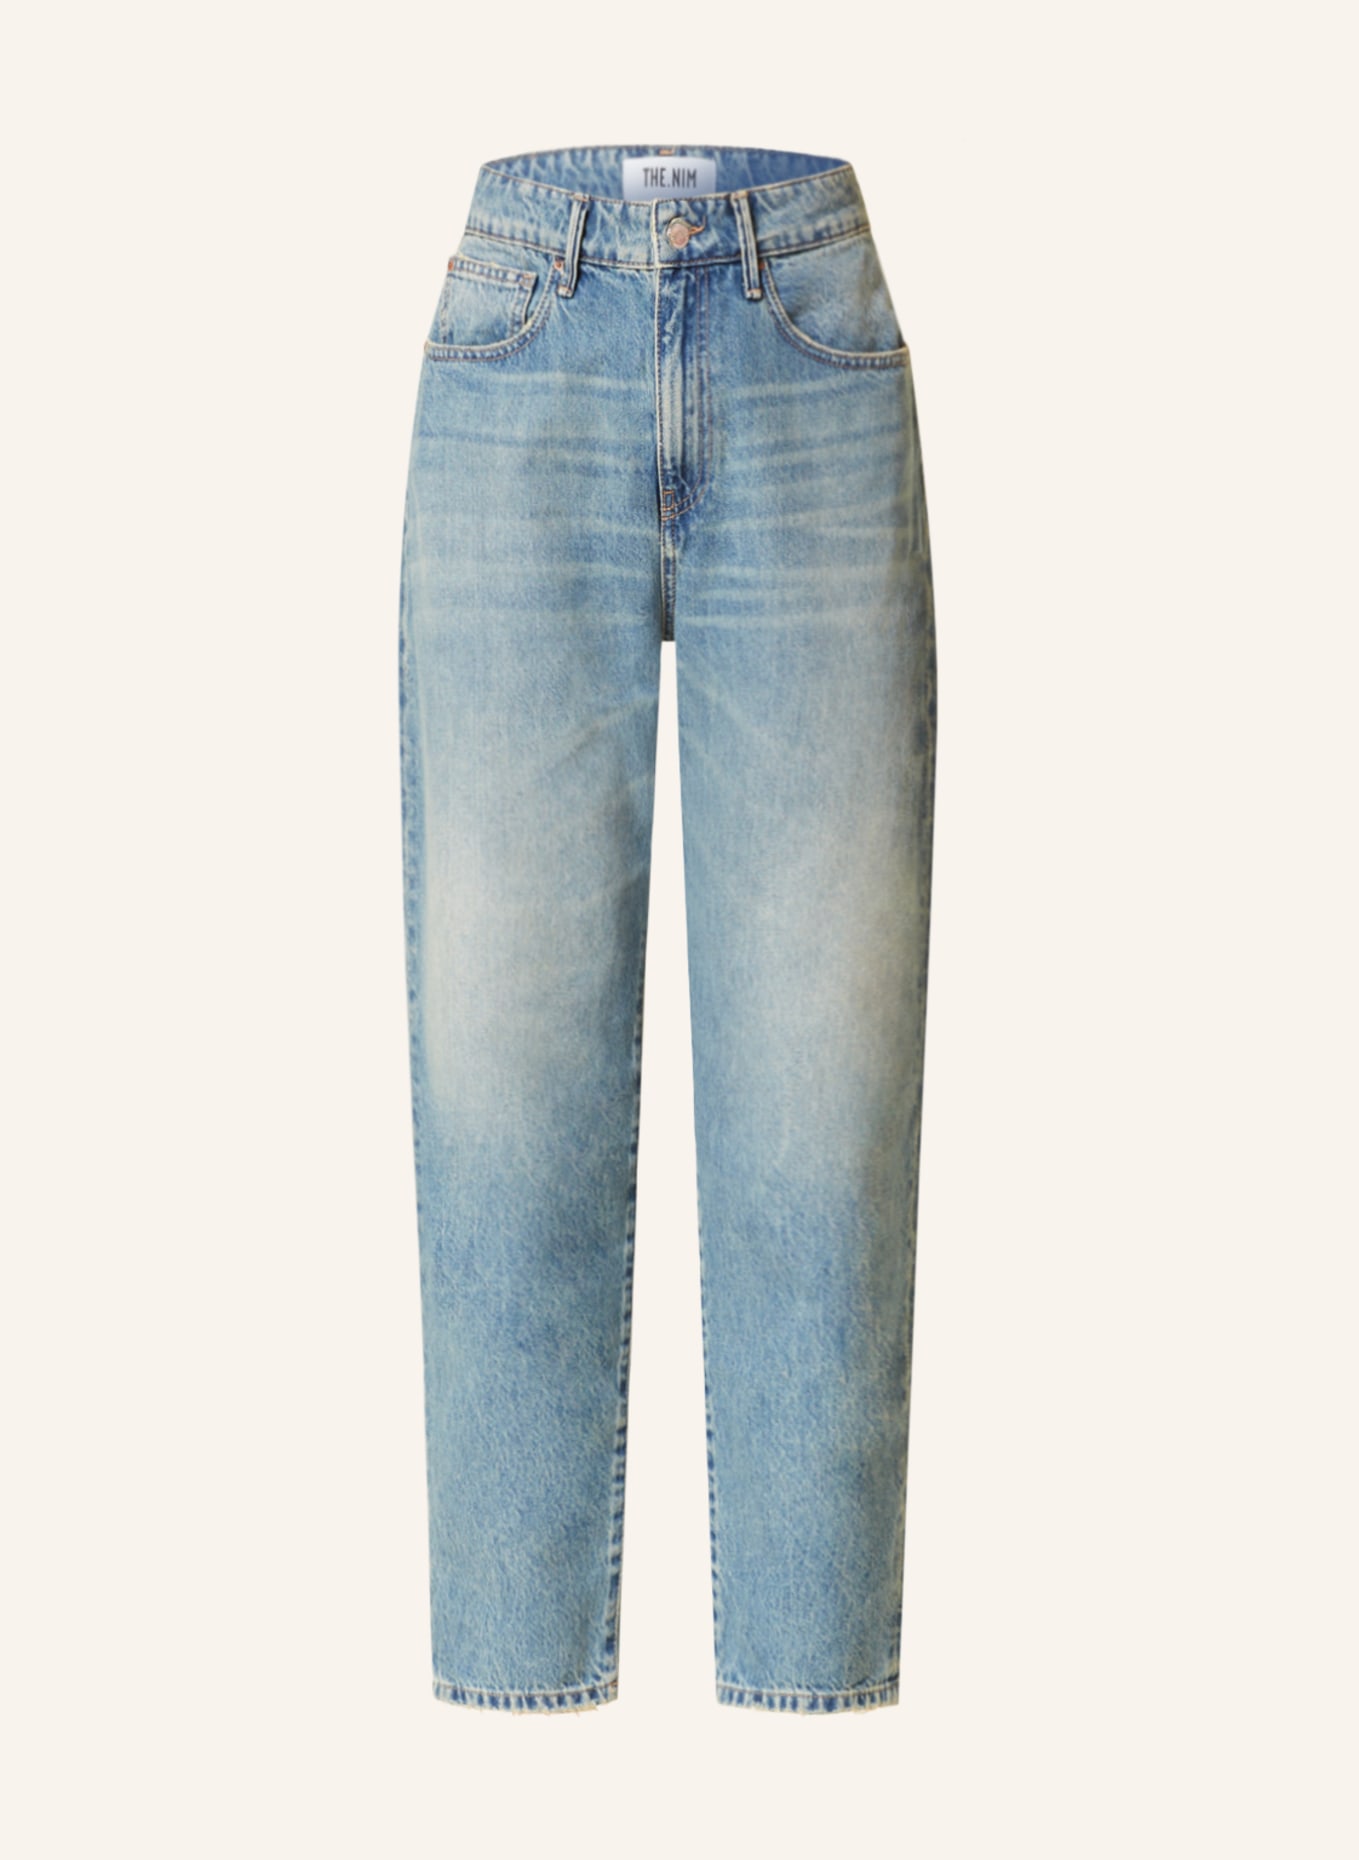 THE.NIM STANDARD 7/8-Jeans COURTNEY, Farbe: W809-SNF LIGHT BLUE (Bild 1)